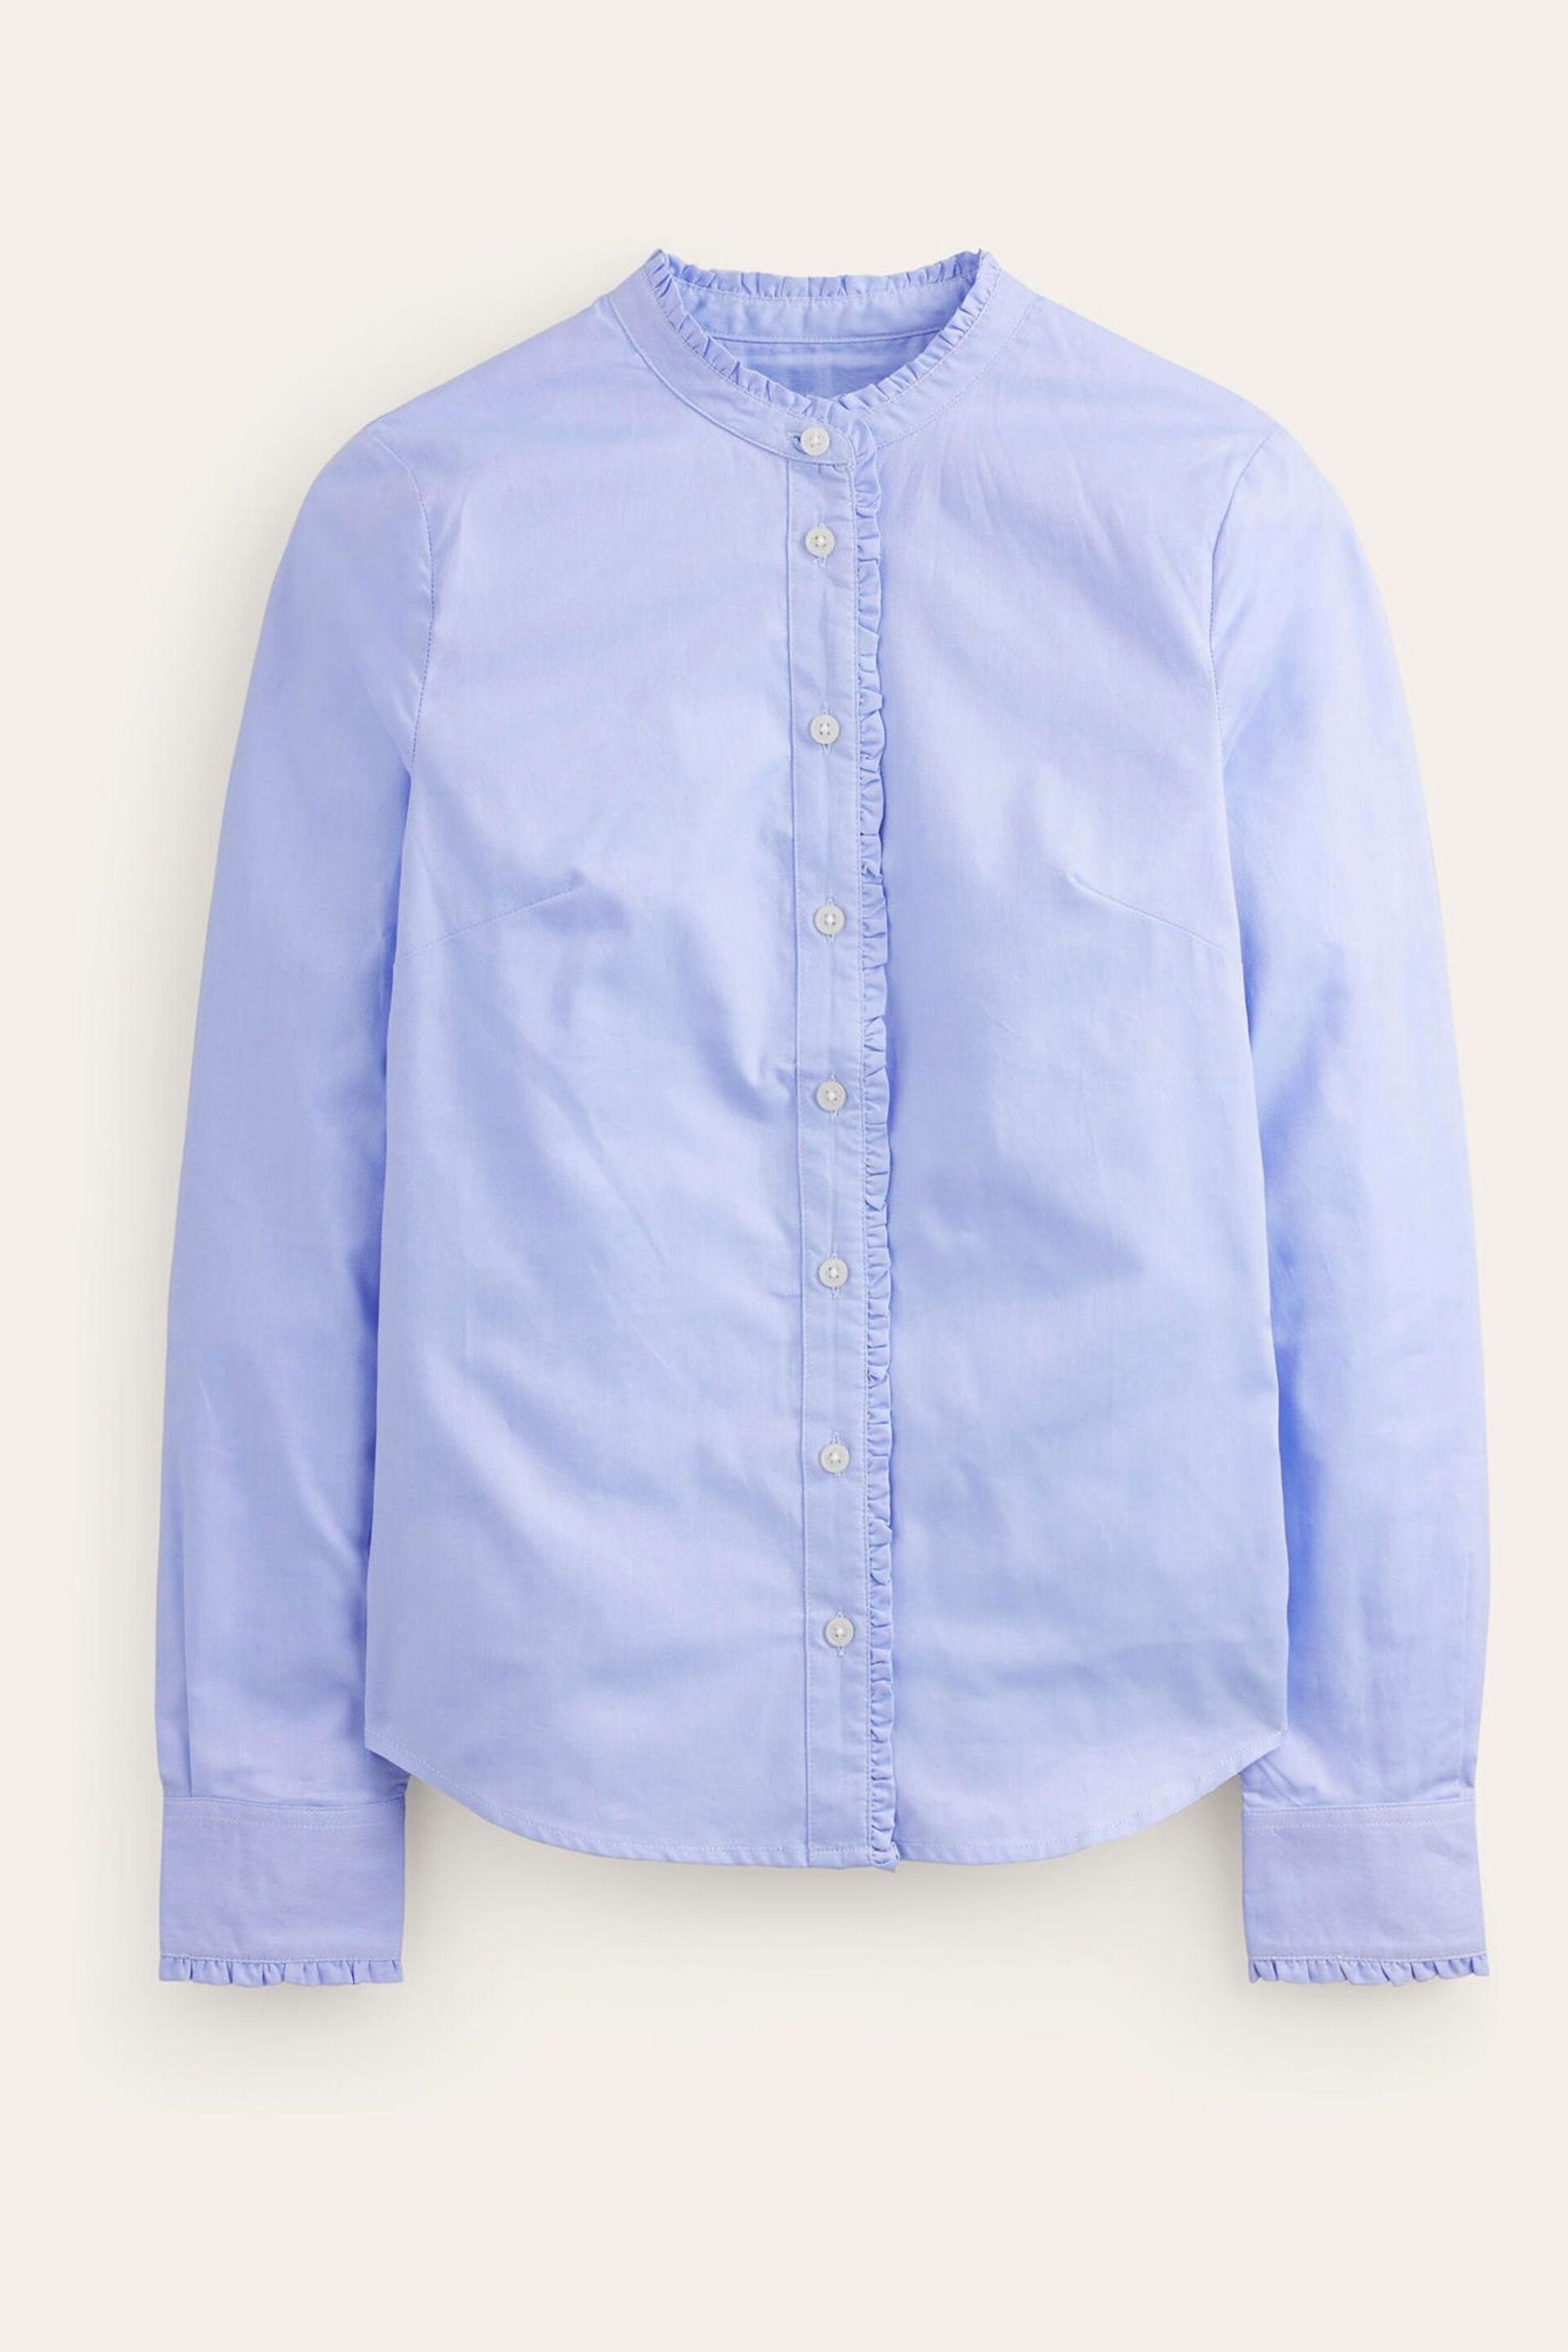 Boden Sky Blue Ruffled Cotton Poplin Shirt - Image 5 of 5